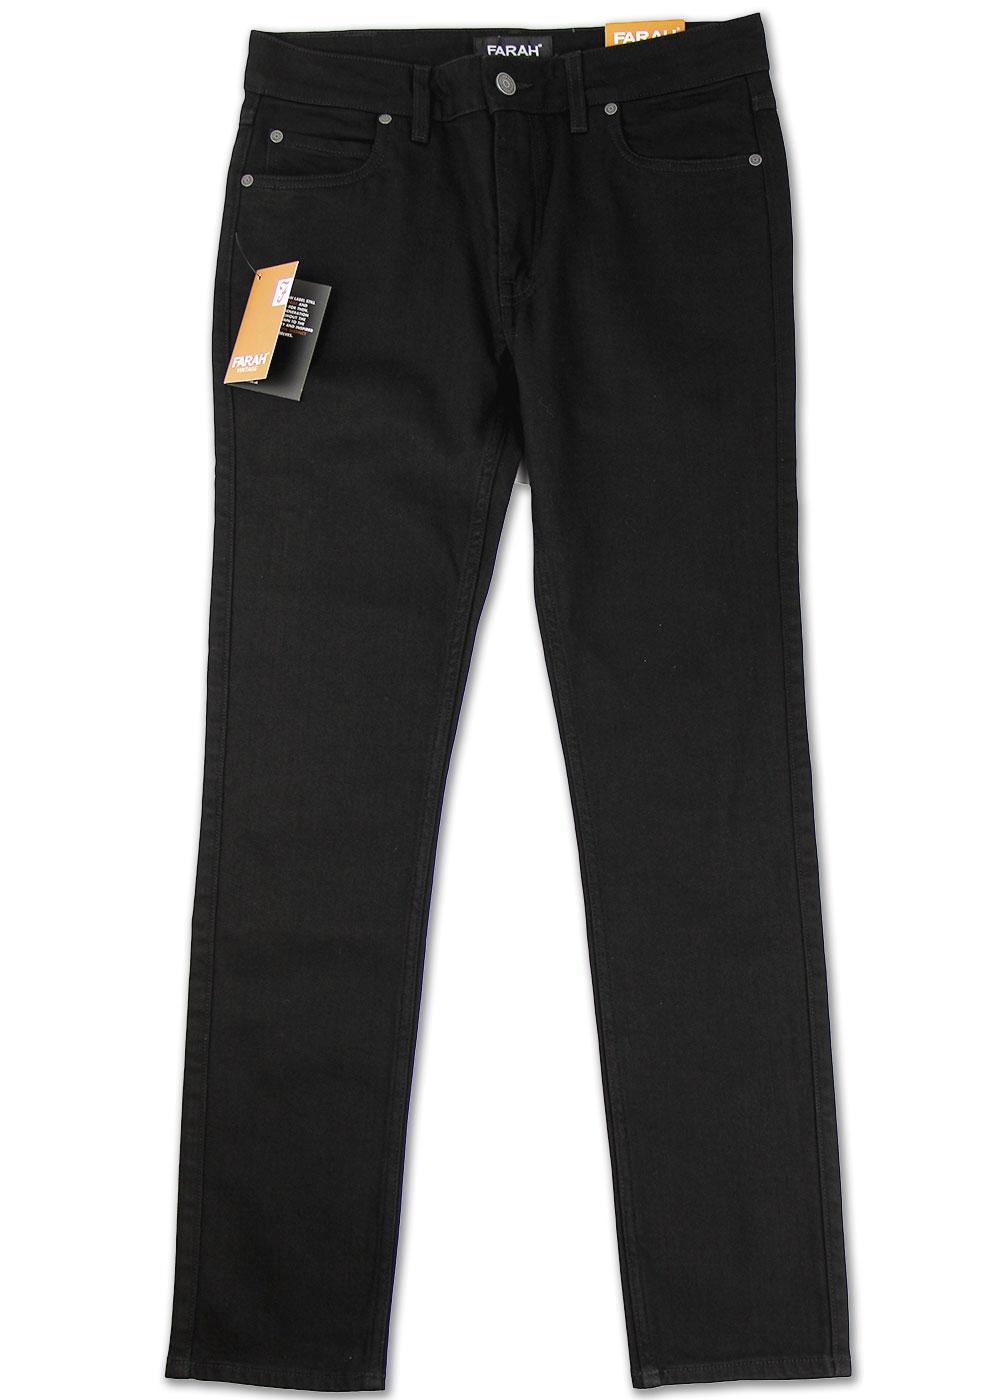 Farah Vintage Drake Denim Retro Mod 5 Pocket Slim Trousers Black